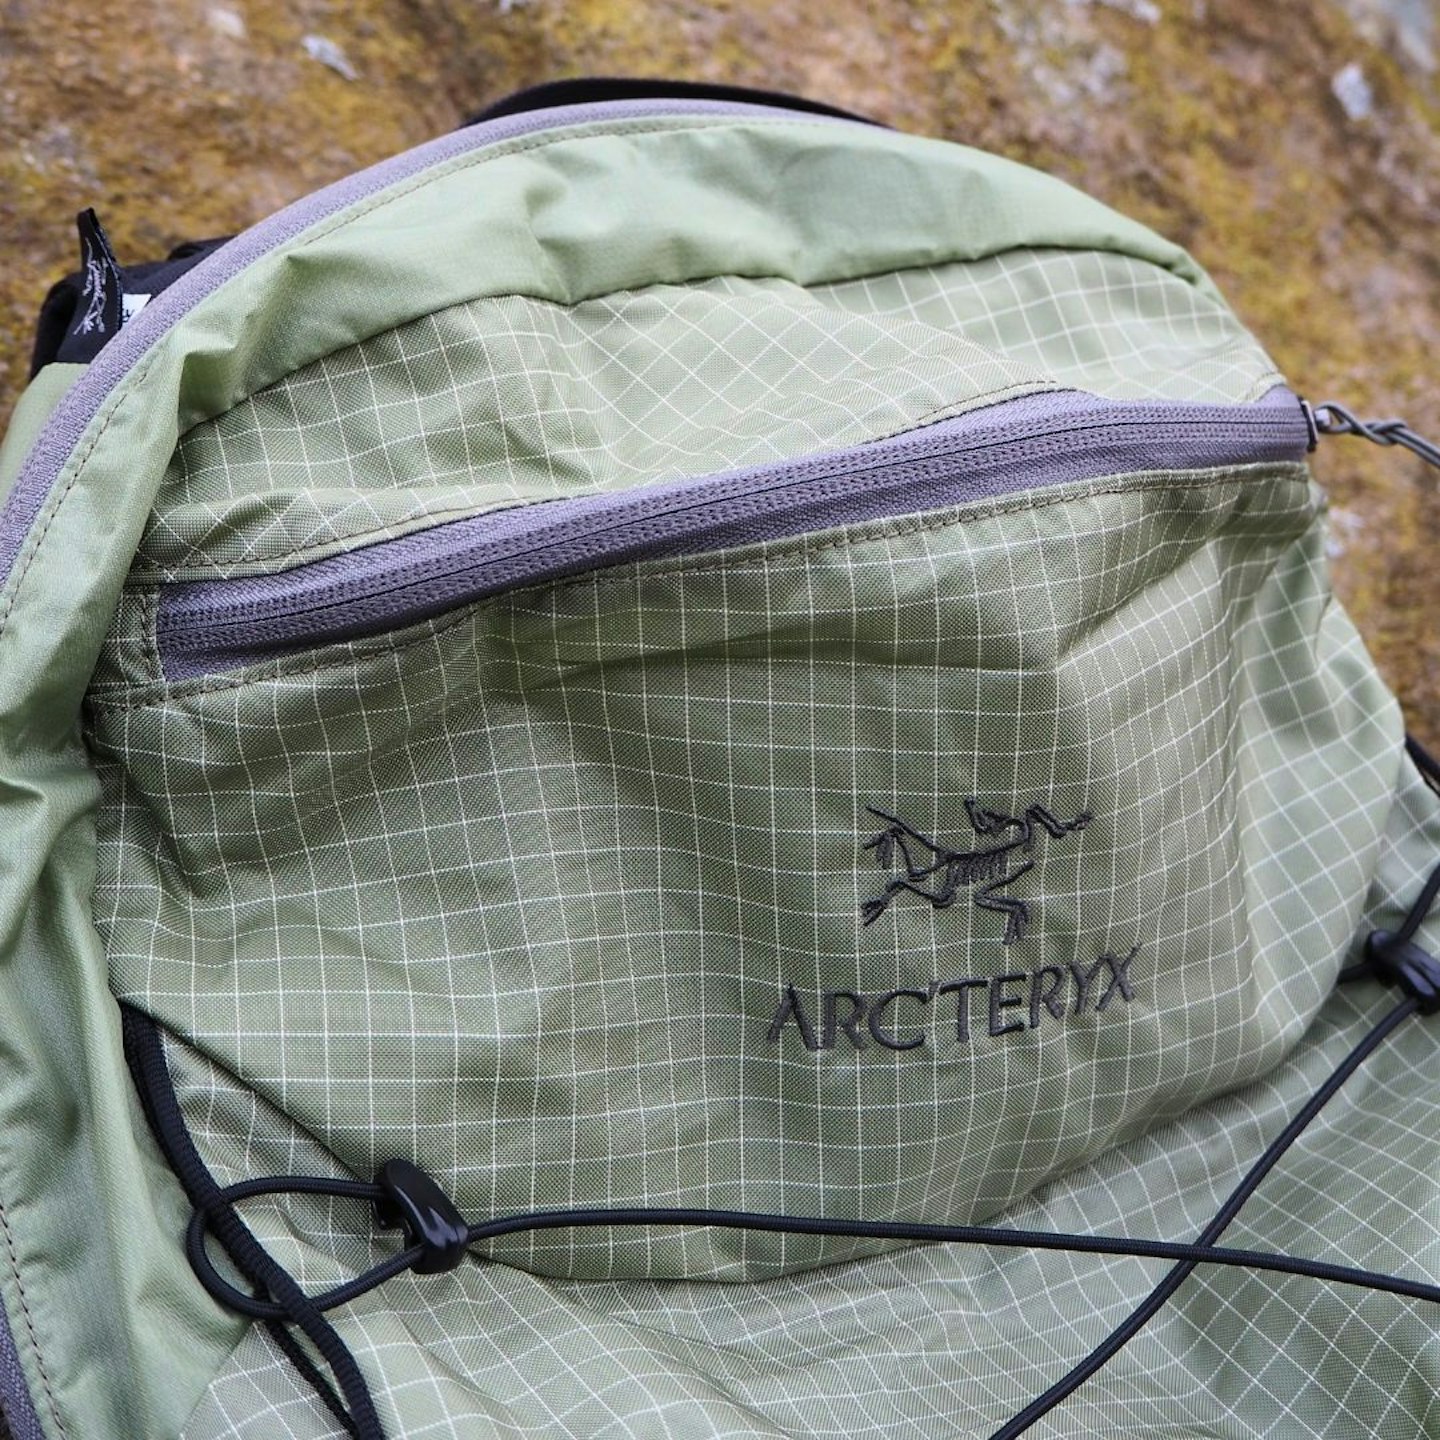 Arc’teryx Aerios 18 Backpack top pocket